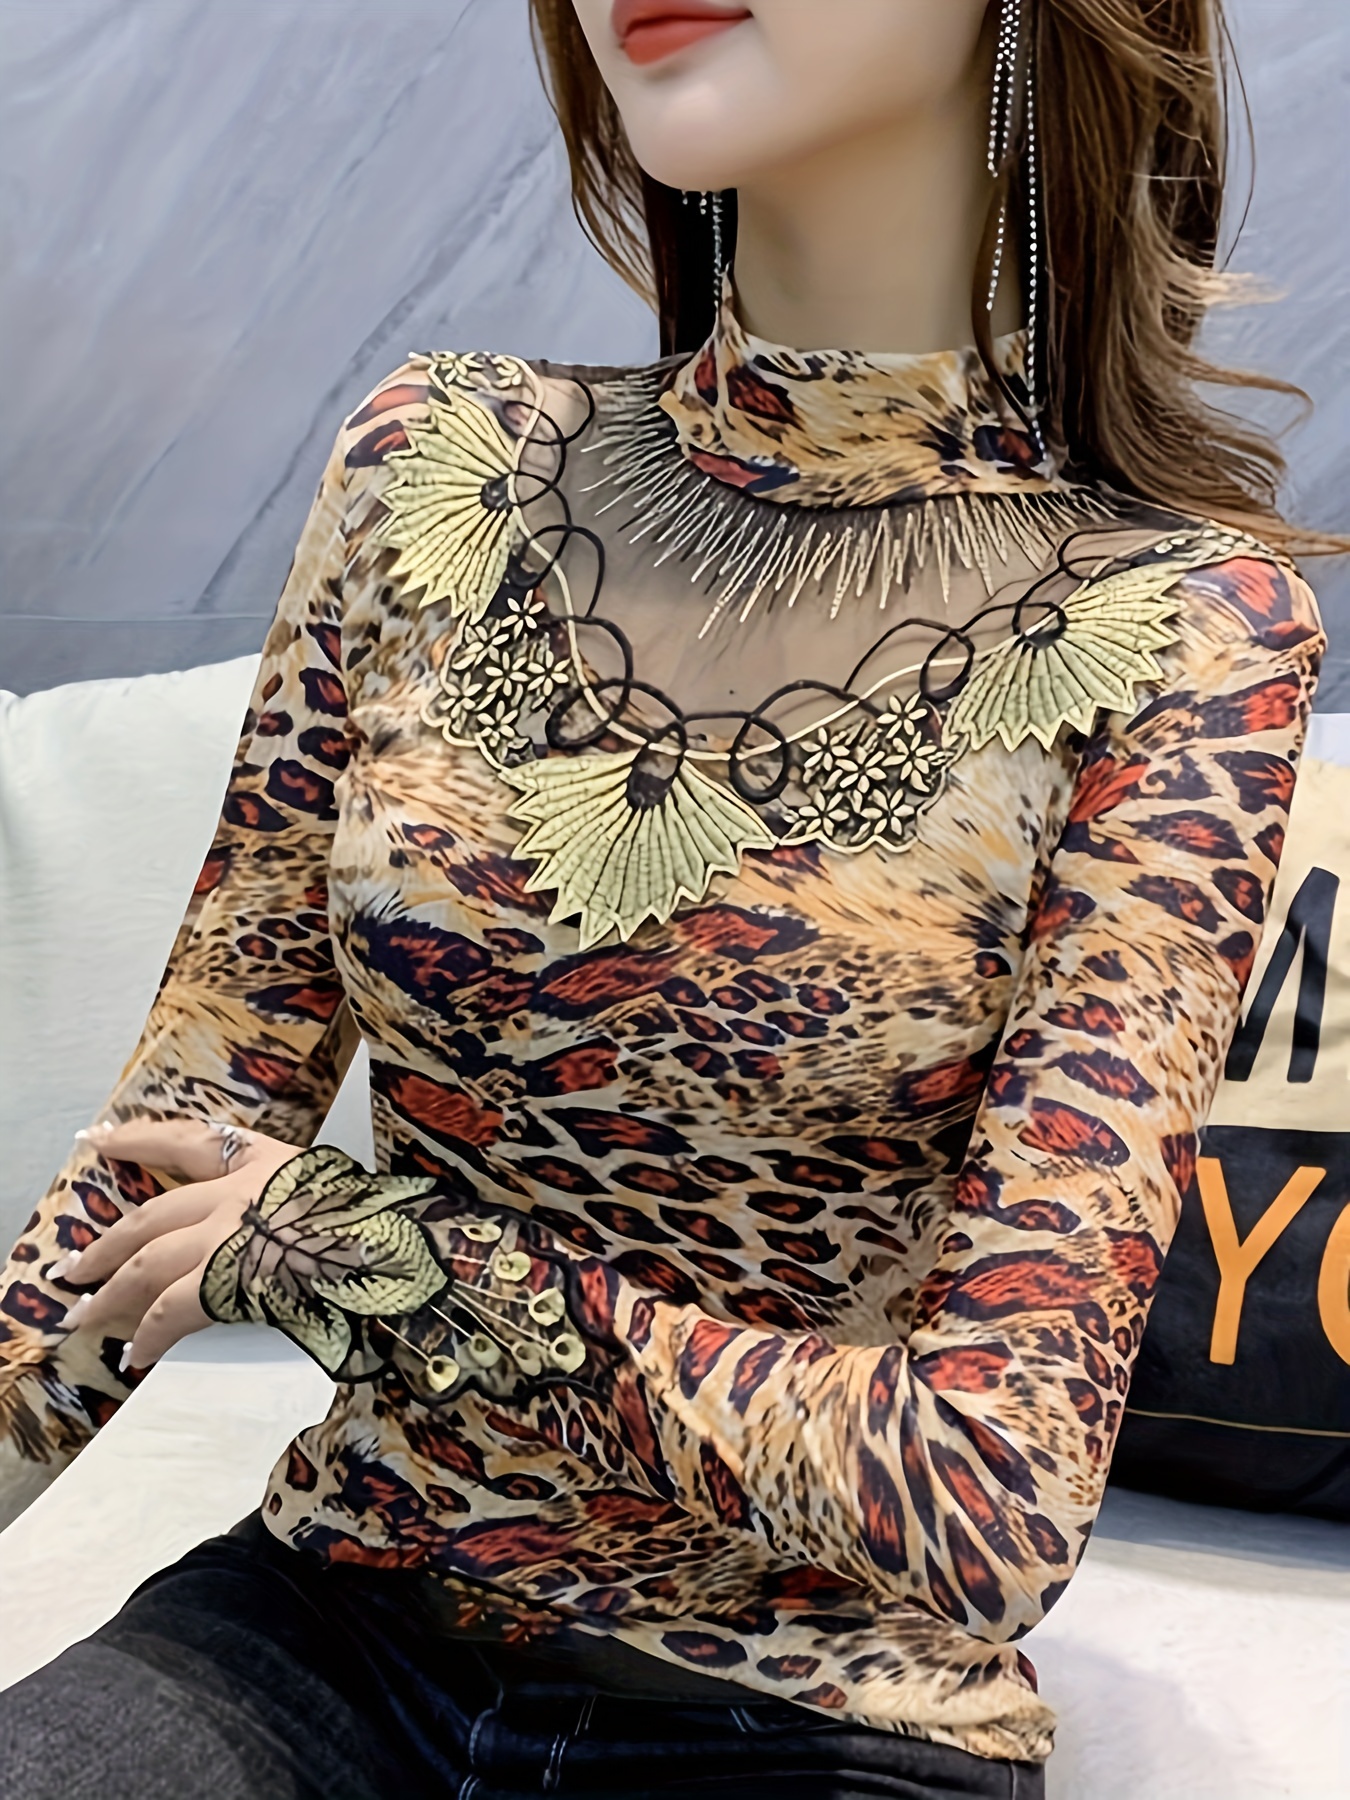 Joyspun Mesh Trim Knit Leopard Print Robe, Free Inner Chemise - Bras,  Shapewear, Activewear, Lingerie, Swimwear Online Shopping